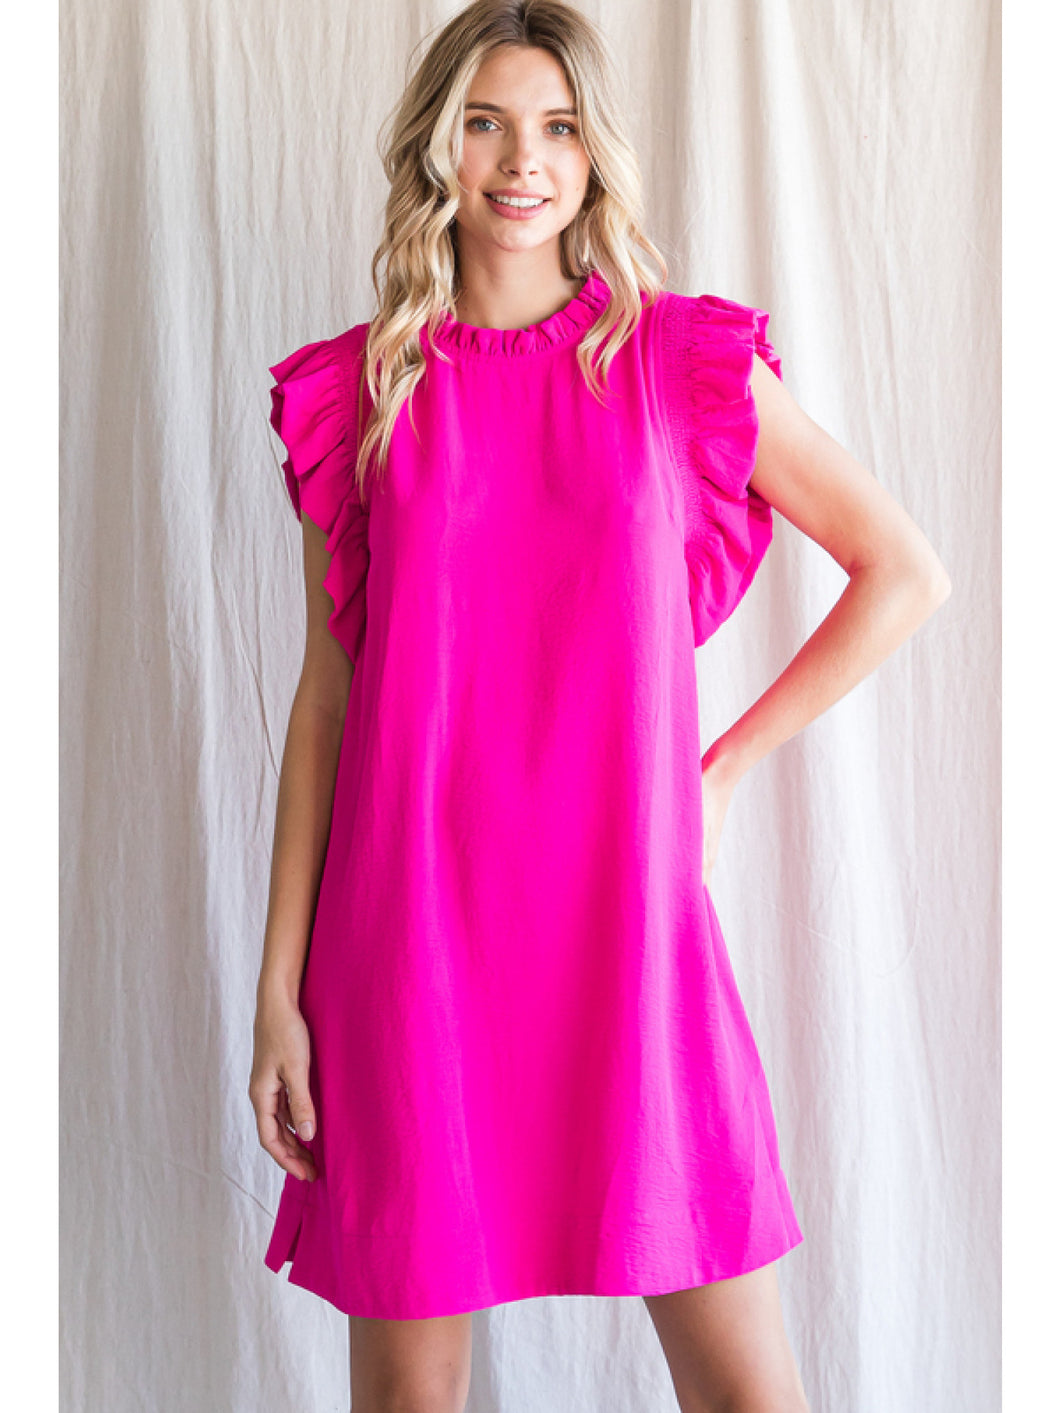 Lauren Ruffle Sleeve Shift Dress in Hot Pink